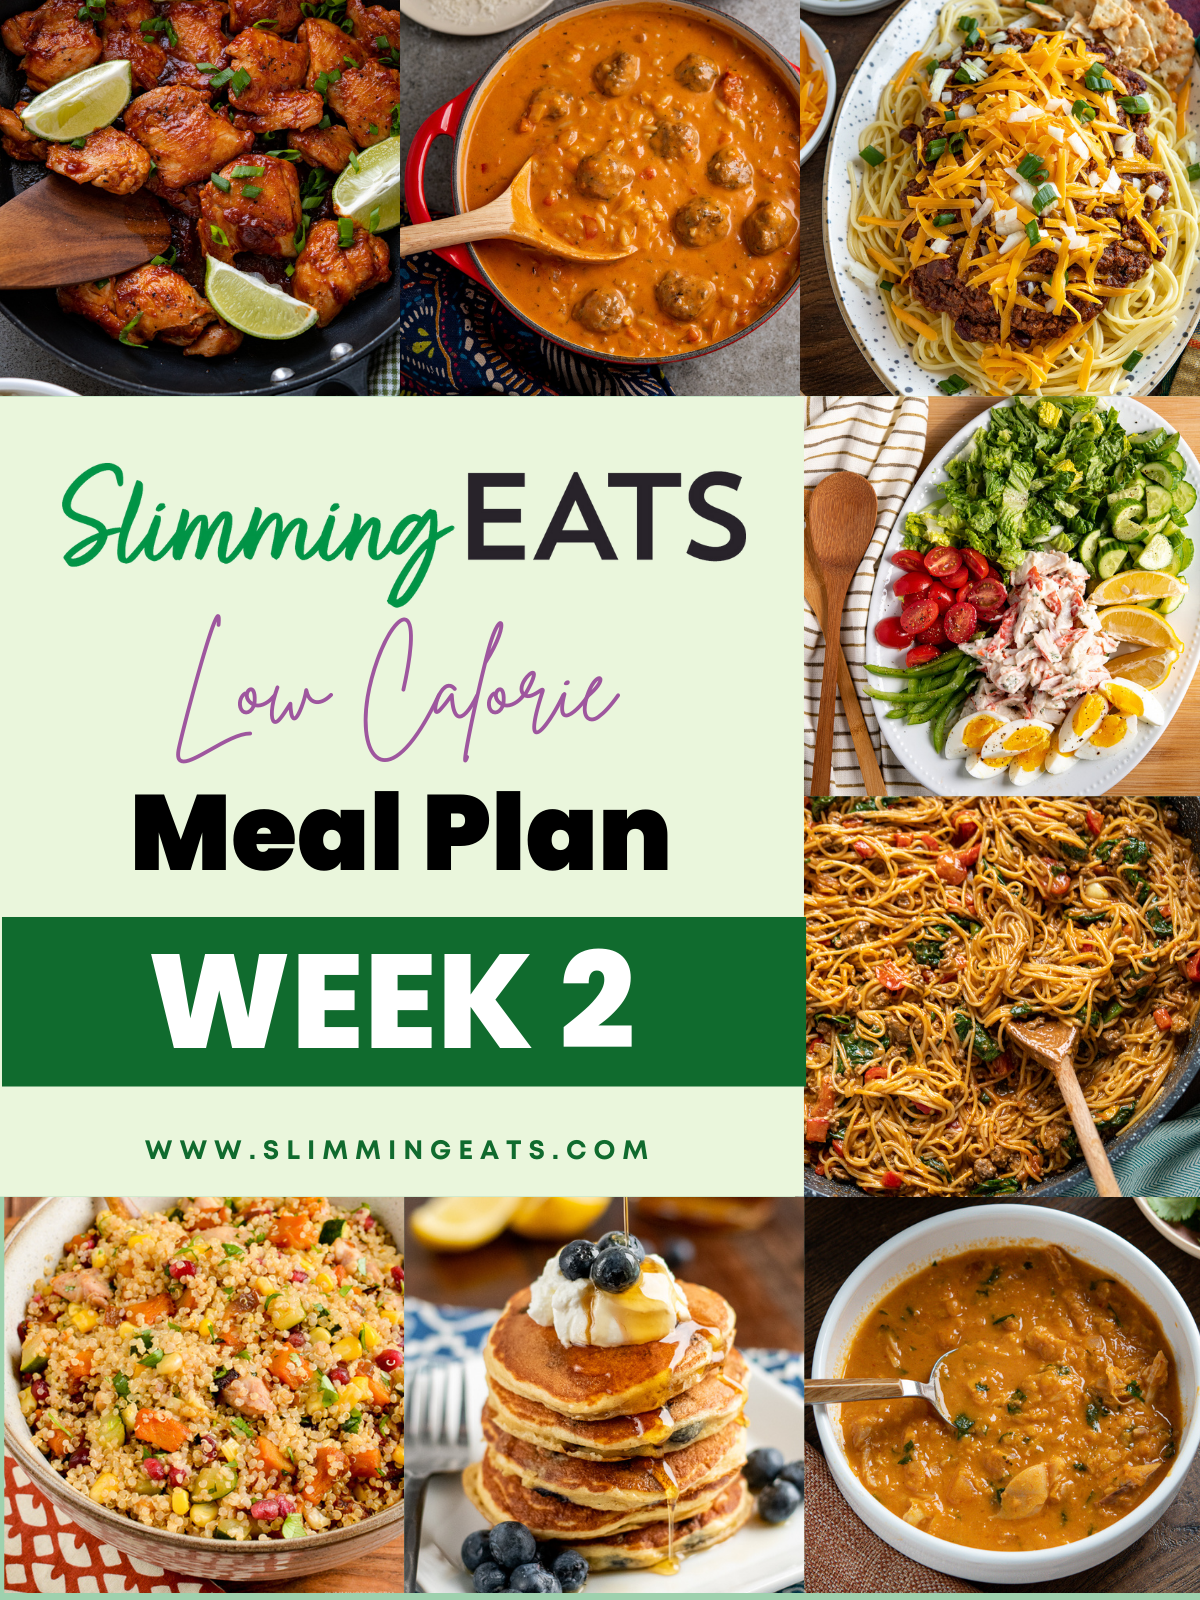 Slimming Eats 7-day low calorie meal plan - week 2 image